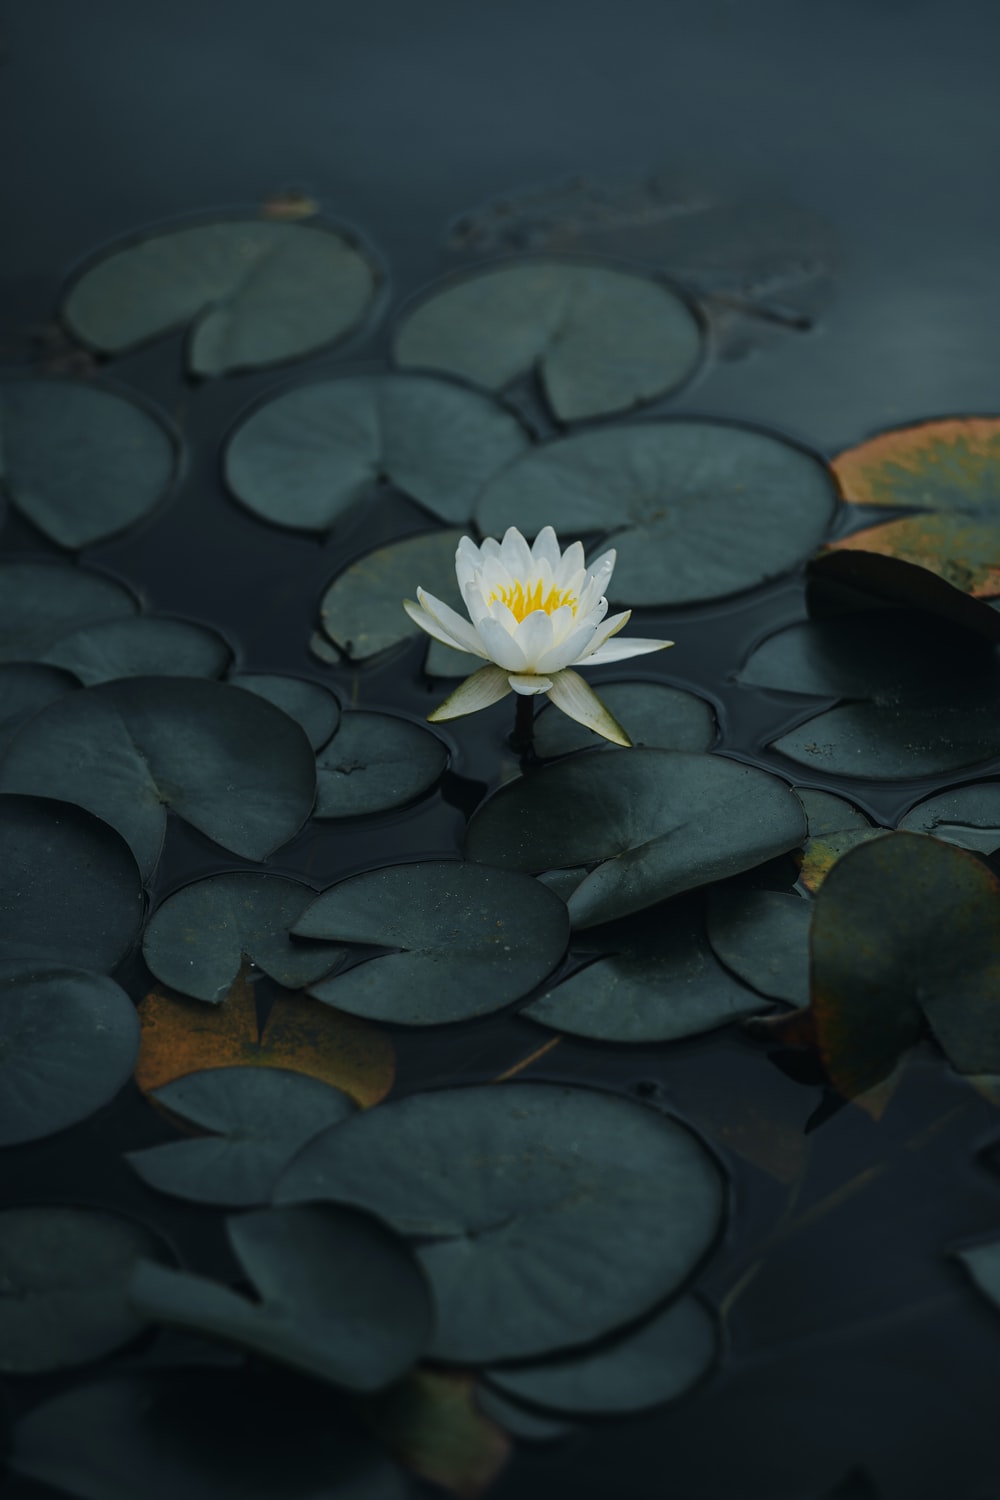 Lotus Picture. Download Free Image